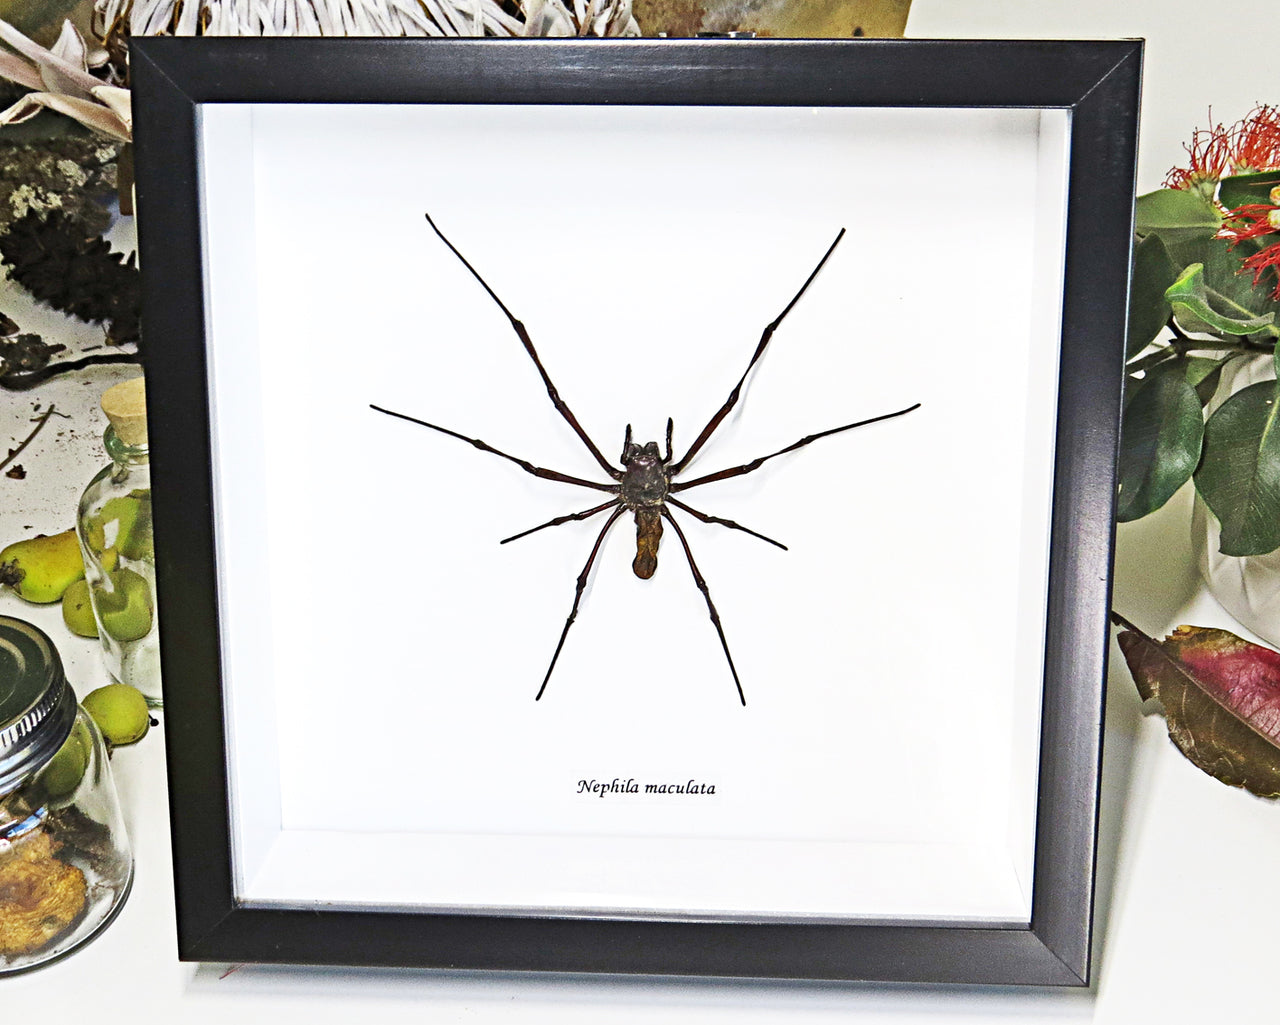 Nephilia Spider in Black Frame